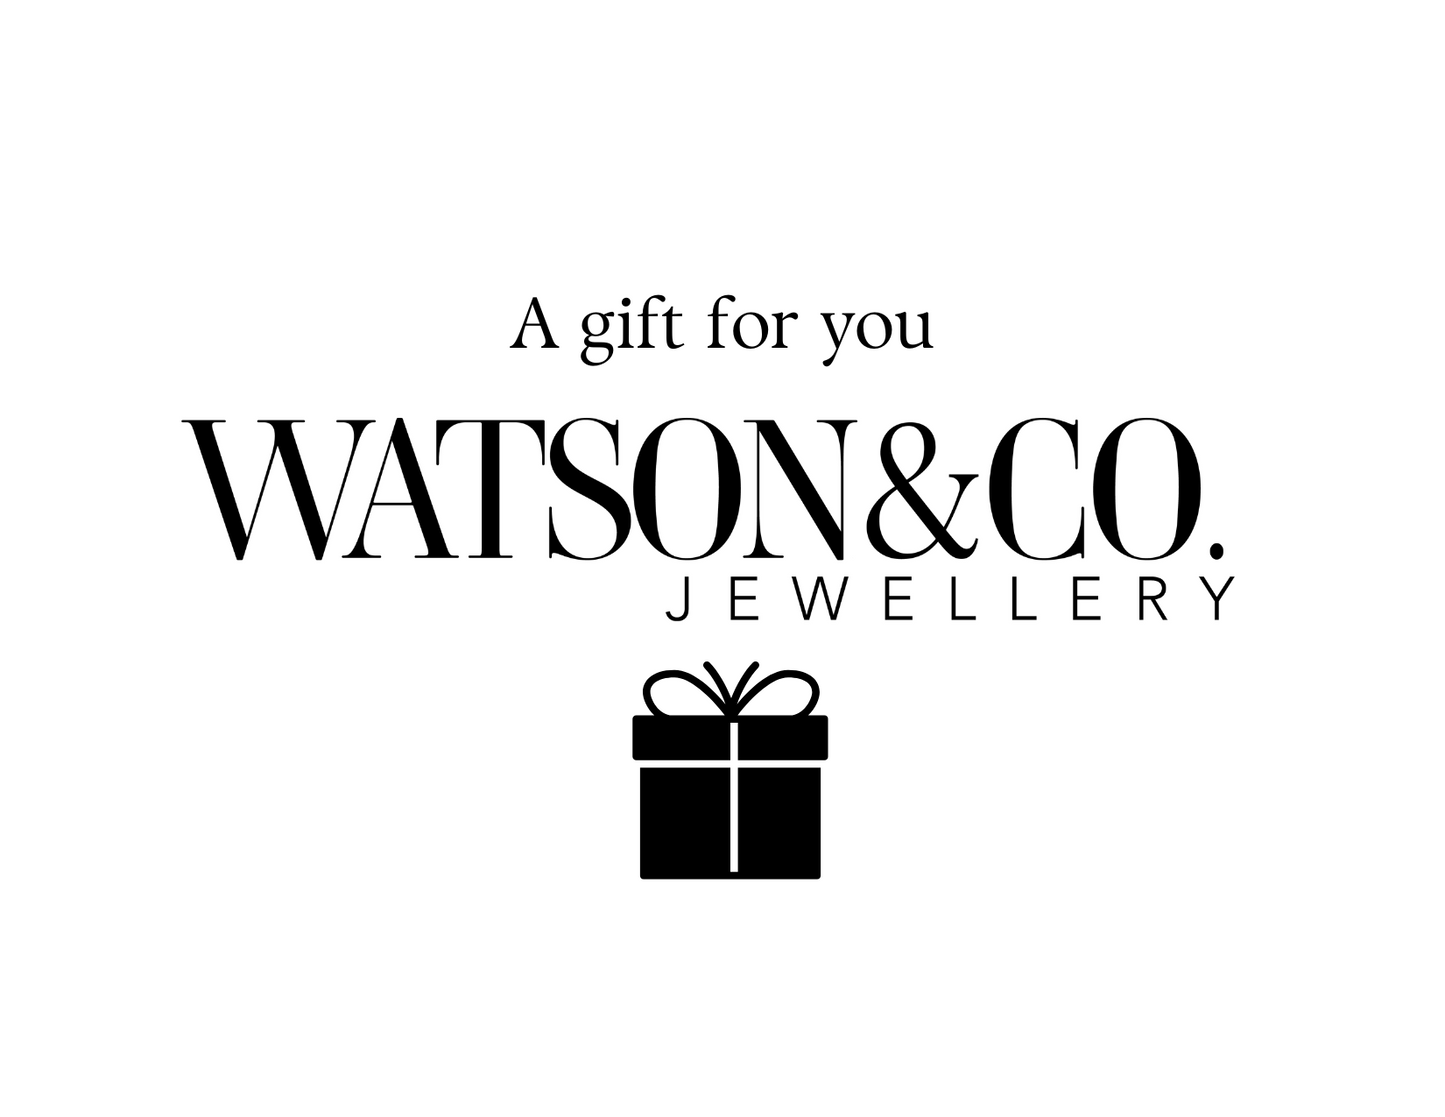 Watson & Co. Jewellery Gift Card